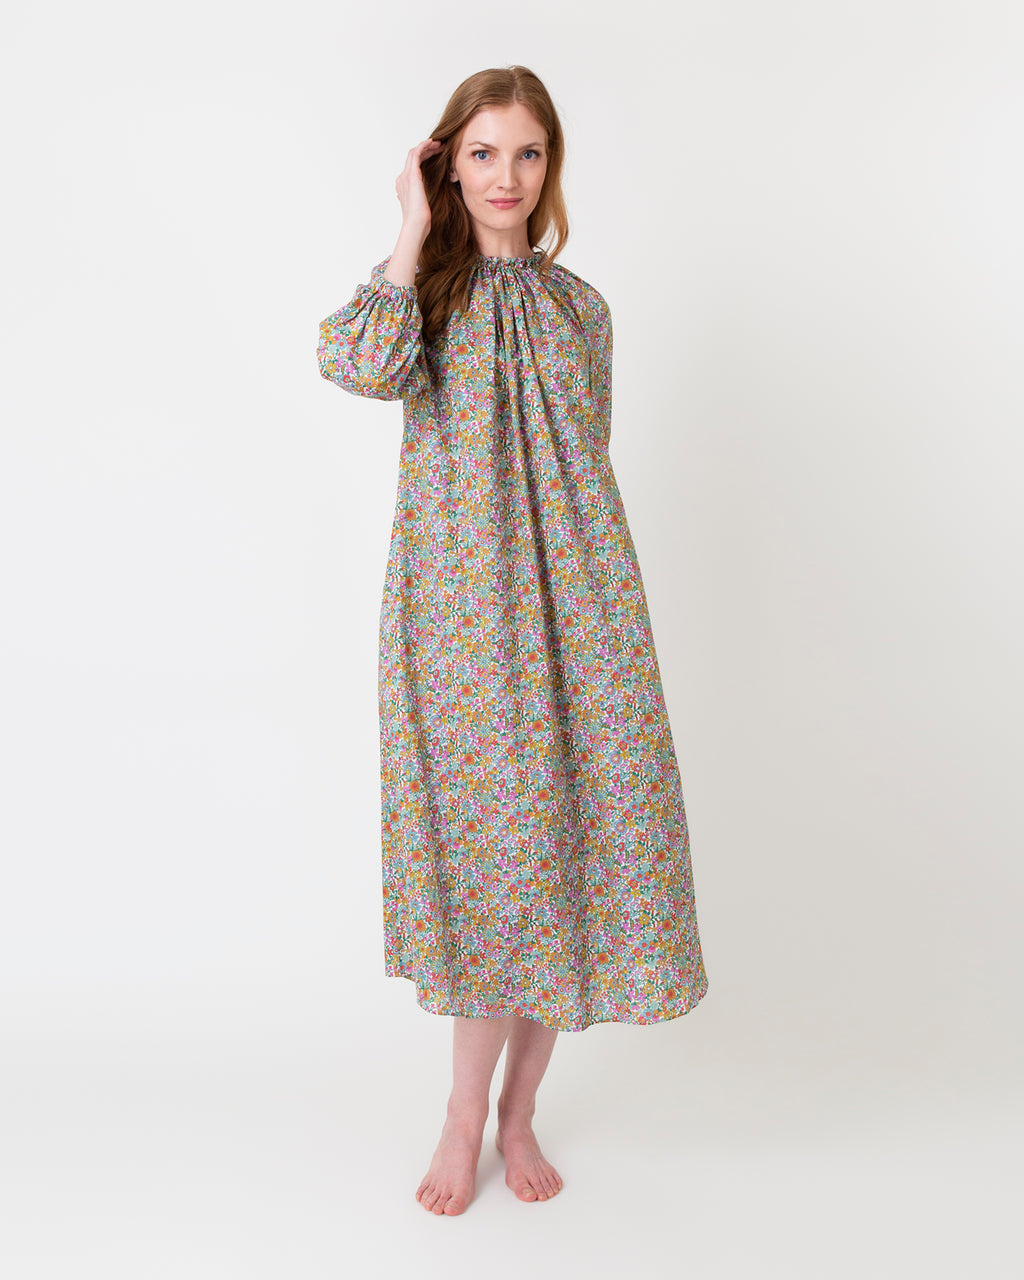 Moda Fabrics - June Tailor - Zippity Do Cosmetic Bag – Chateau Sew & Sew